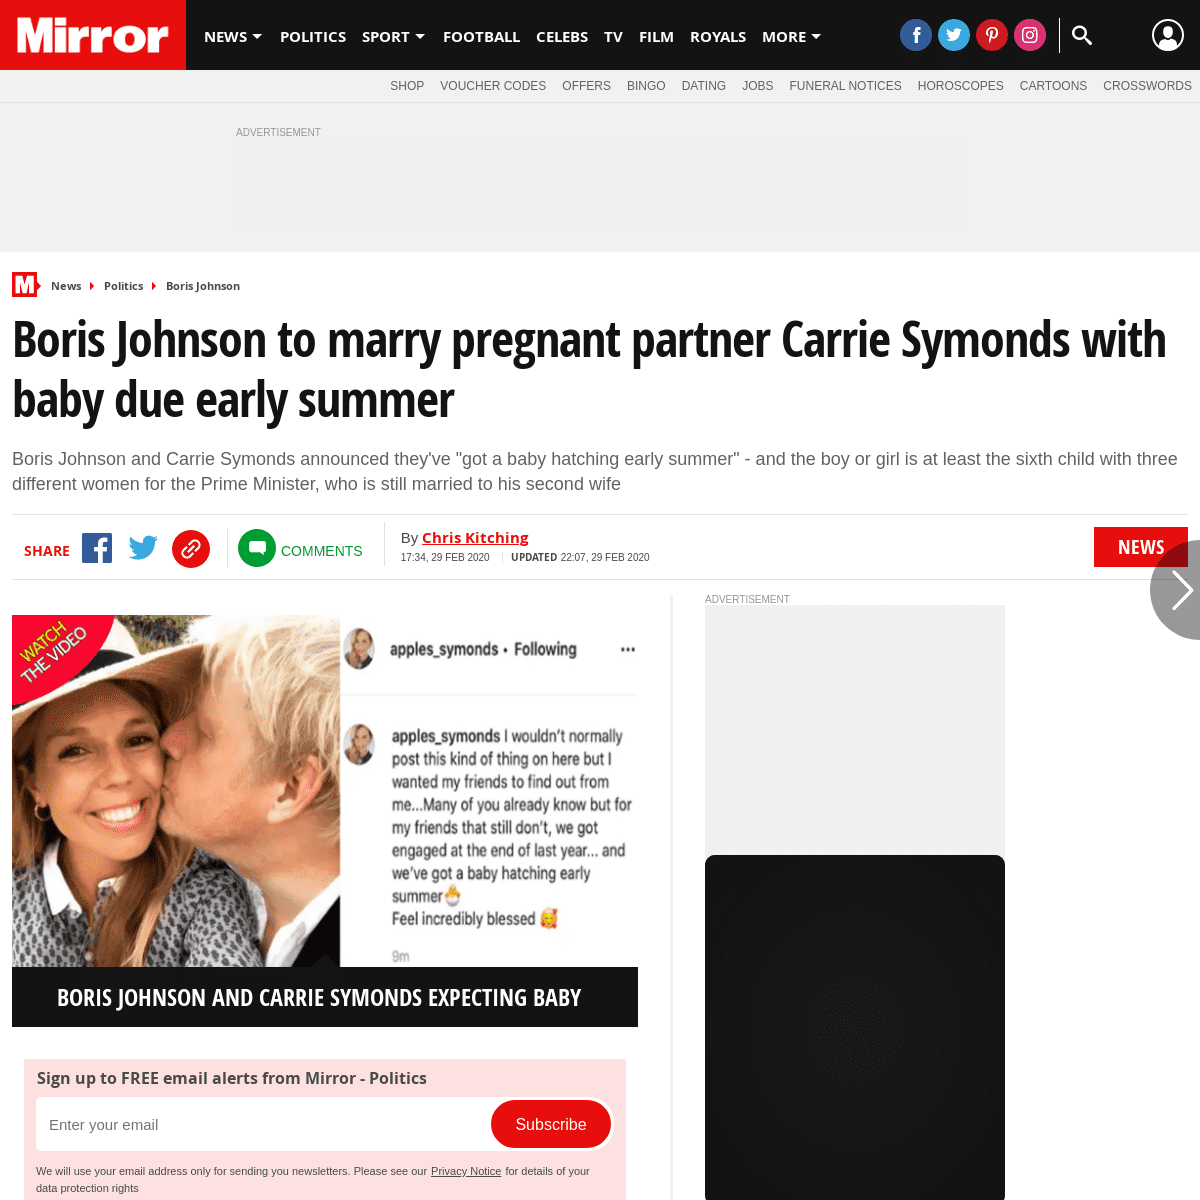 A complete backup of www.mirror.co.uk/news/politics/breaking-boris-johnson-marry-pregnant-21605286